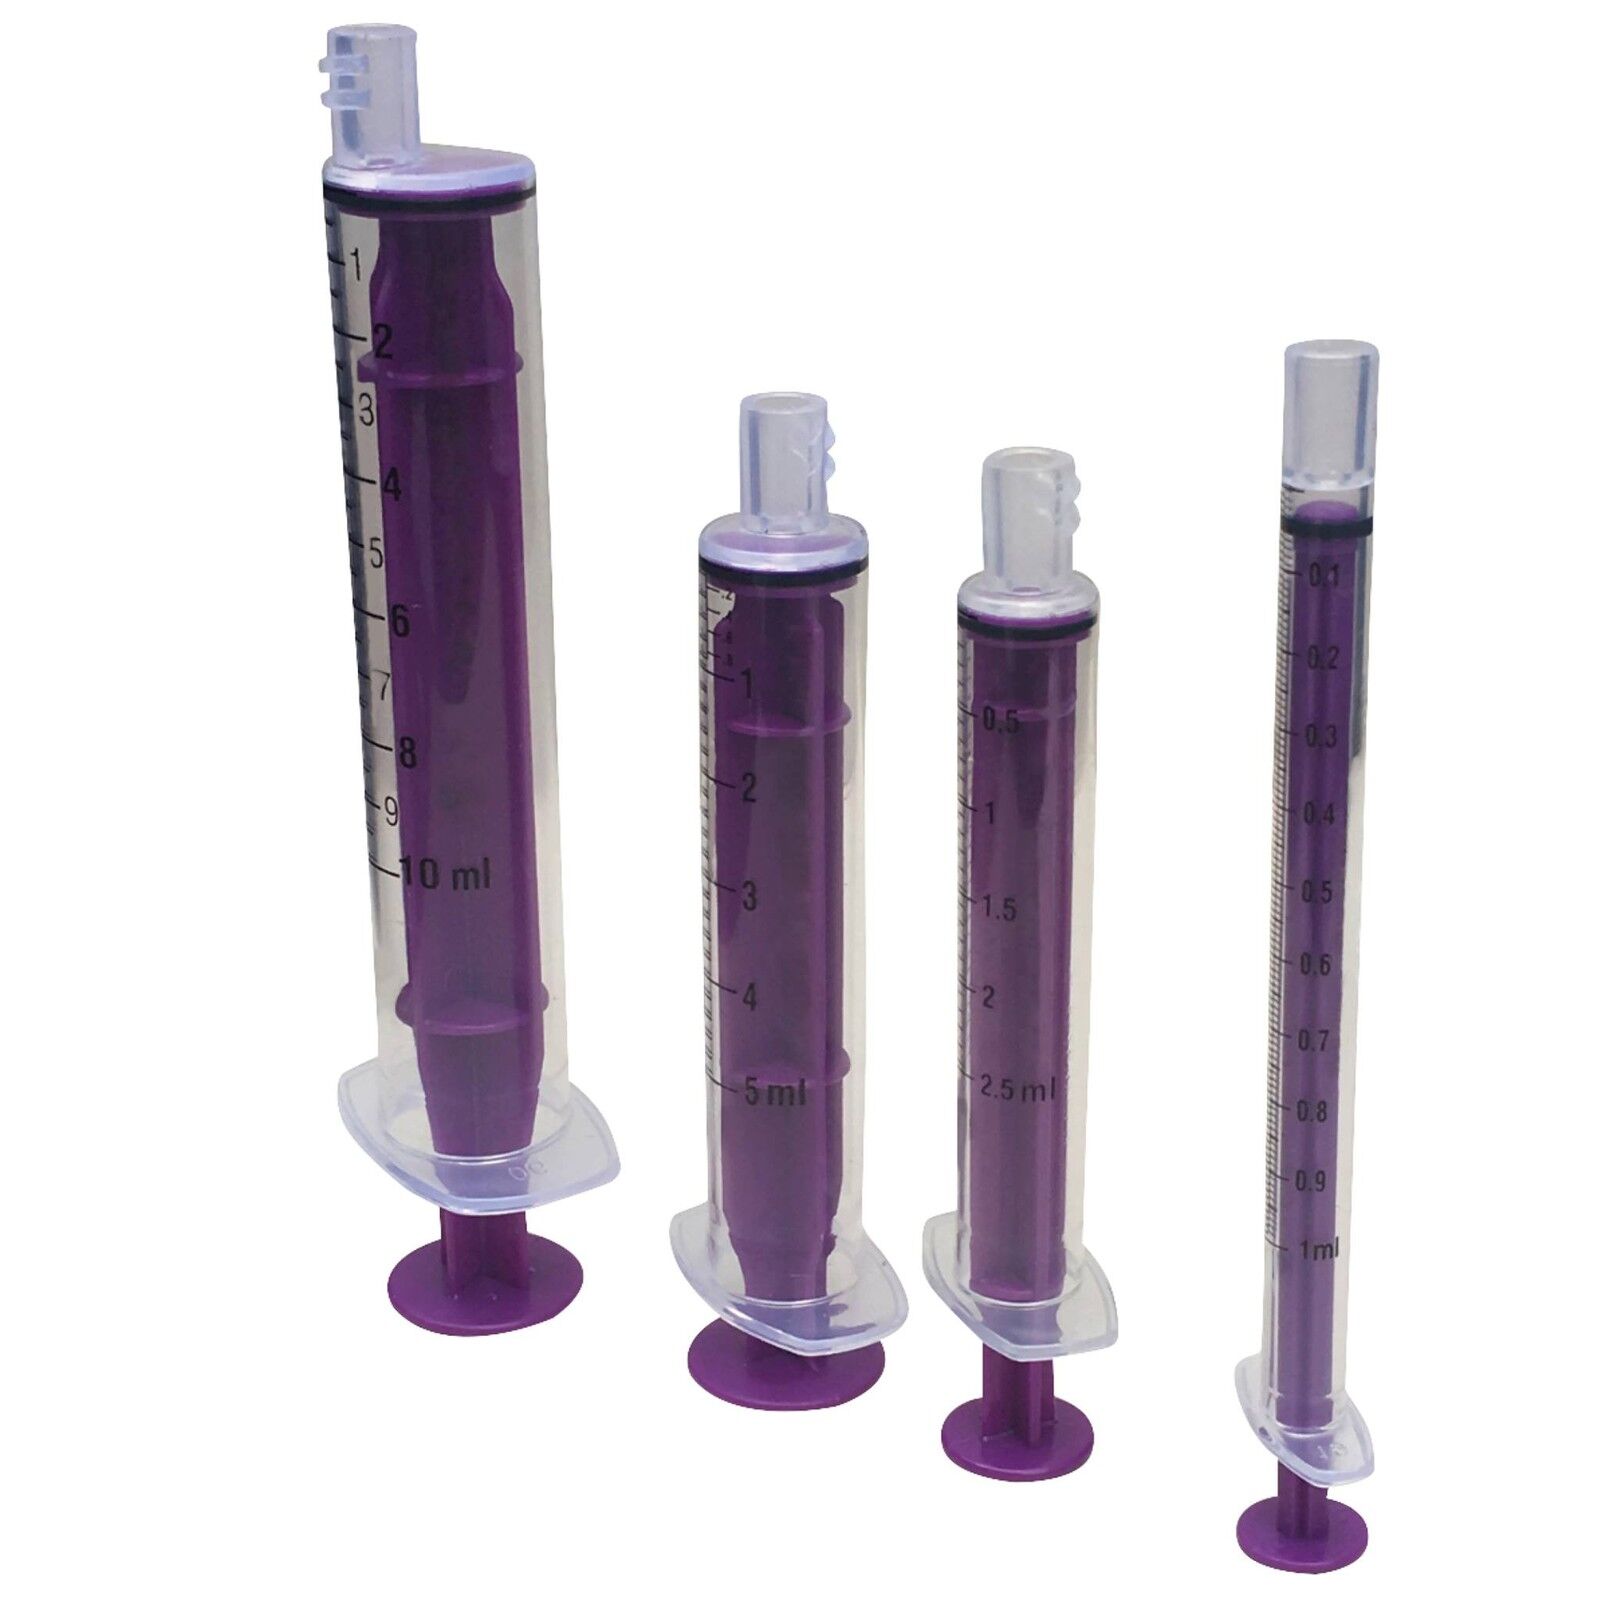 NEW LONGLIFE 5f Sterile Tube Feeding Kit Tube, 2 x 1ml syringes /& Syringe Cap Whelping Puppy Kitten Small Animal